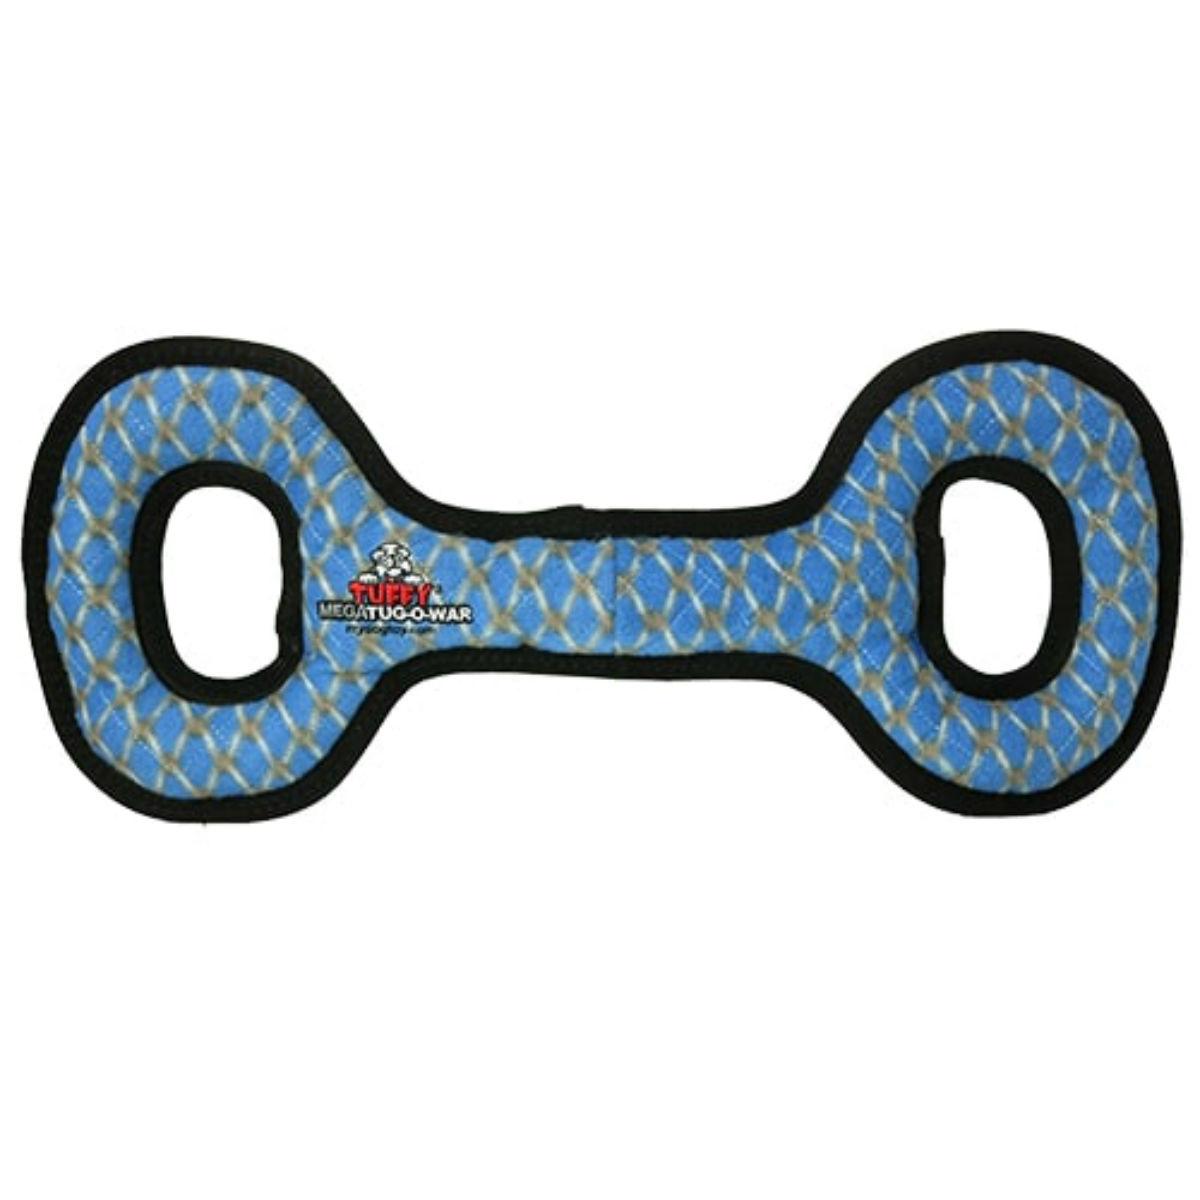 Tuffy Mega Tug Oval Dog Toy - Chain Link